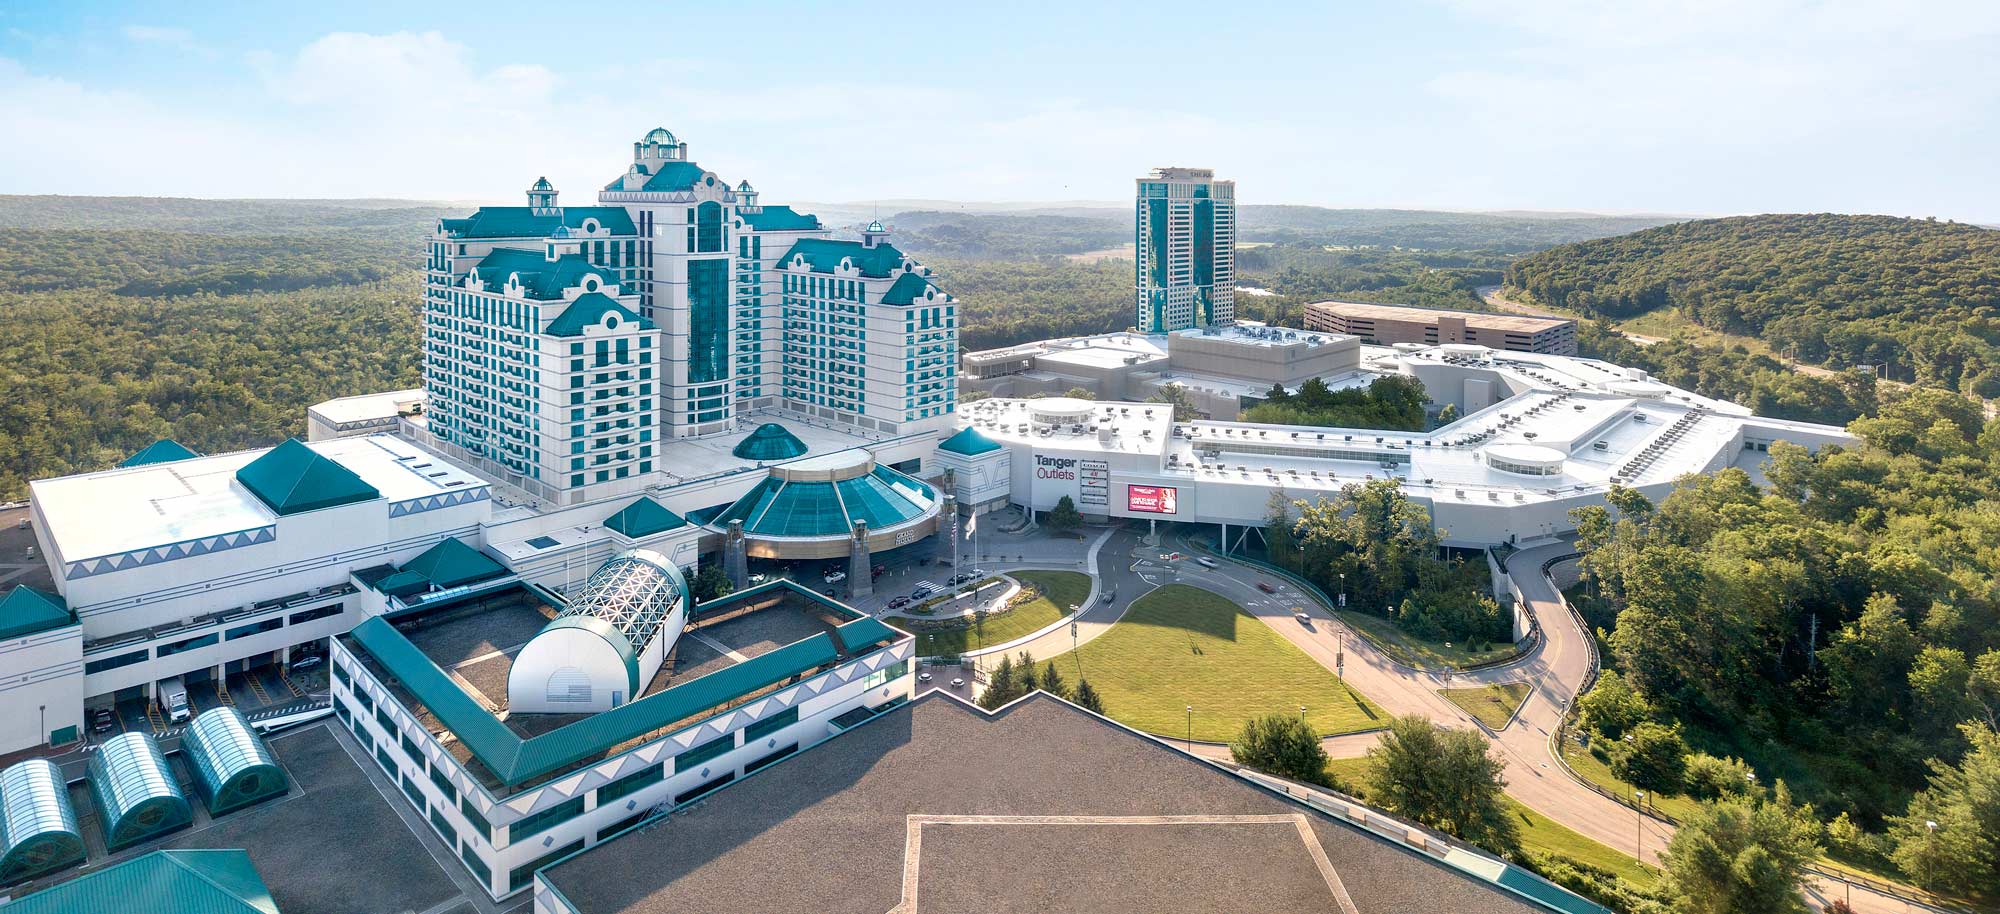 foxwoods online casino hotel